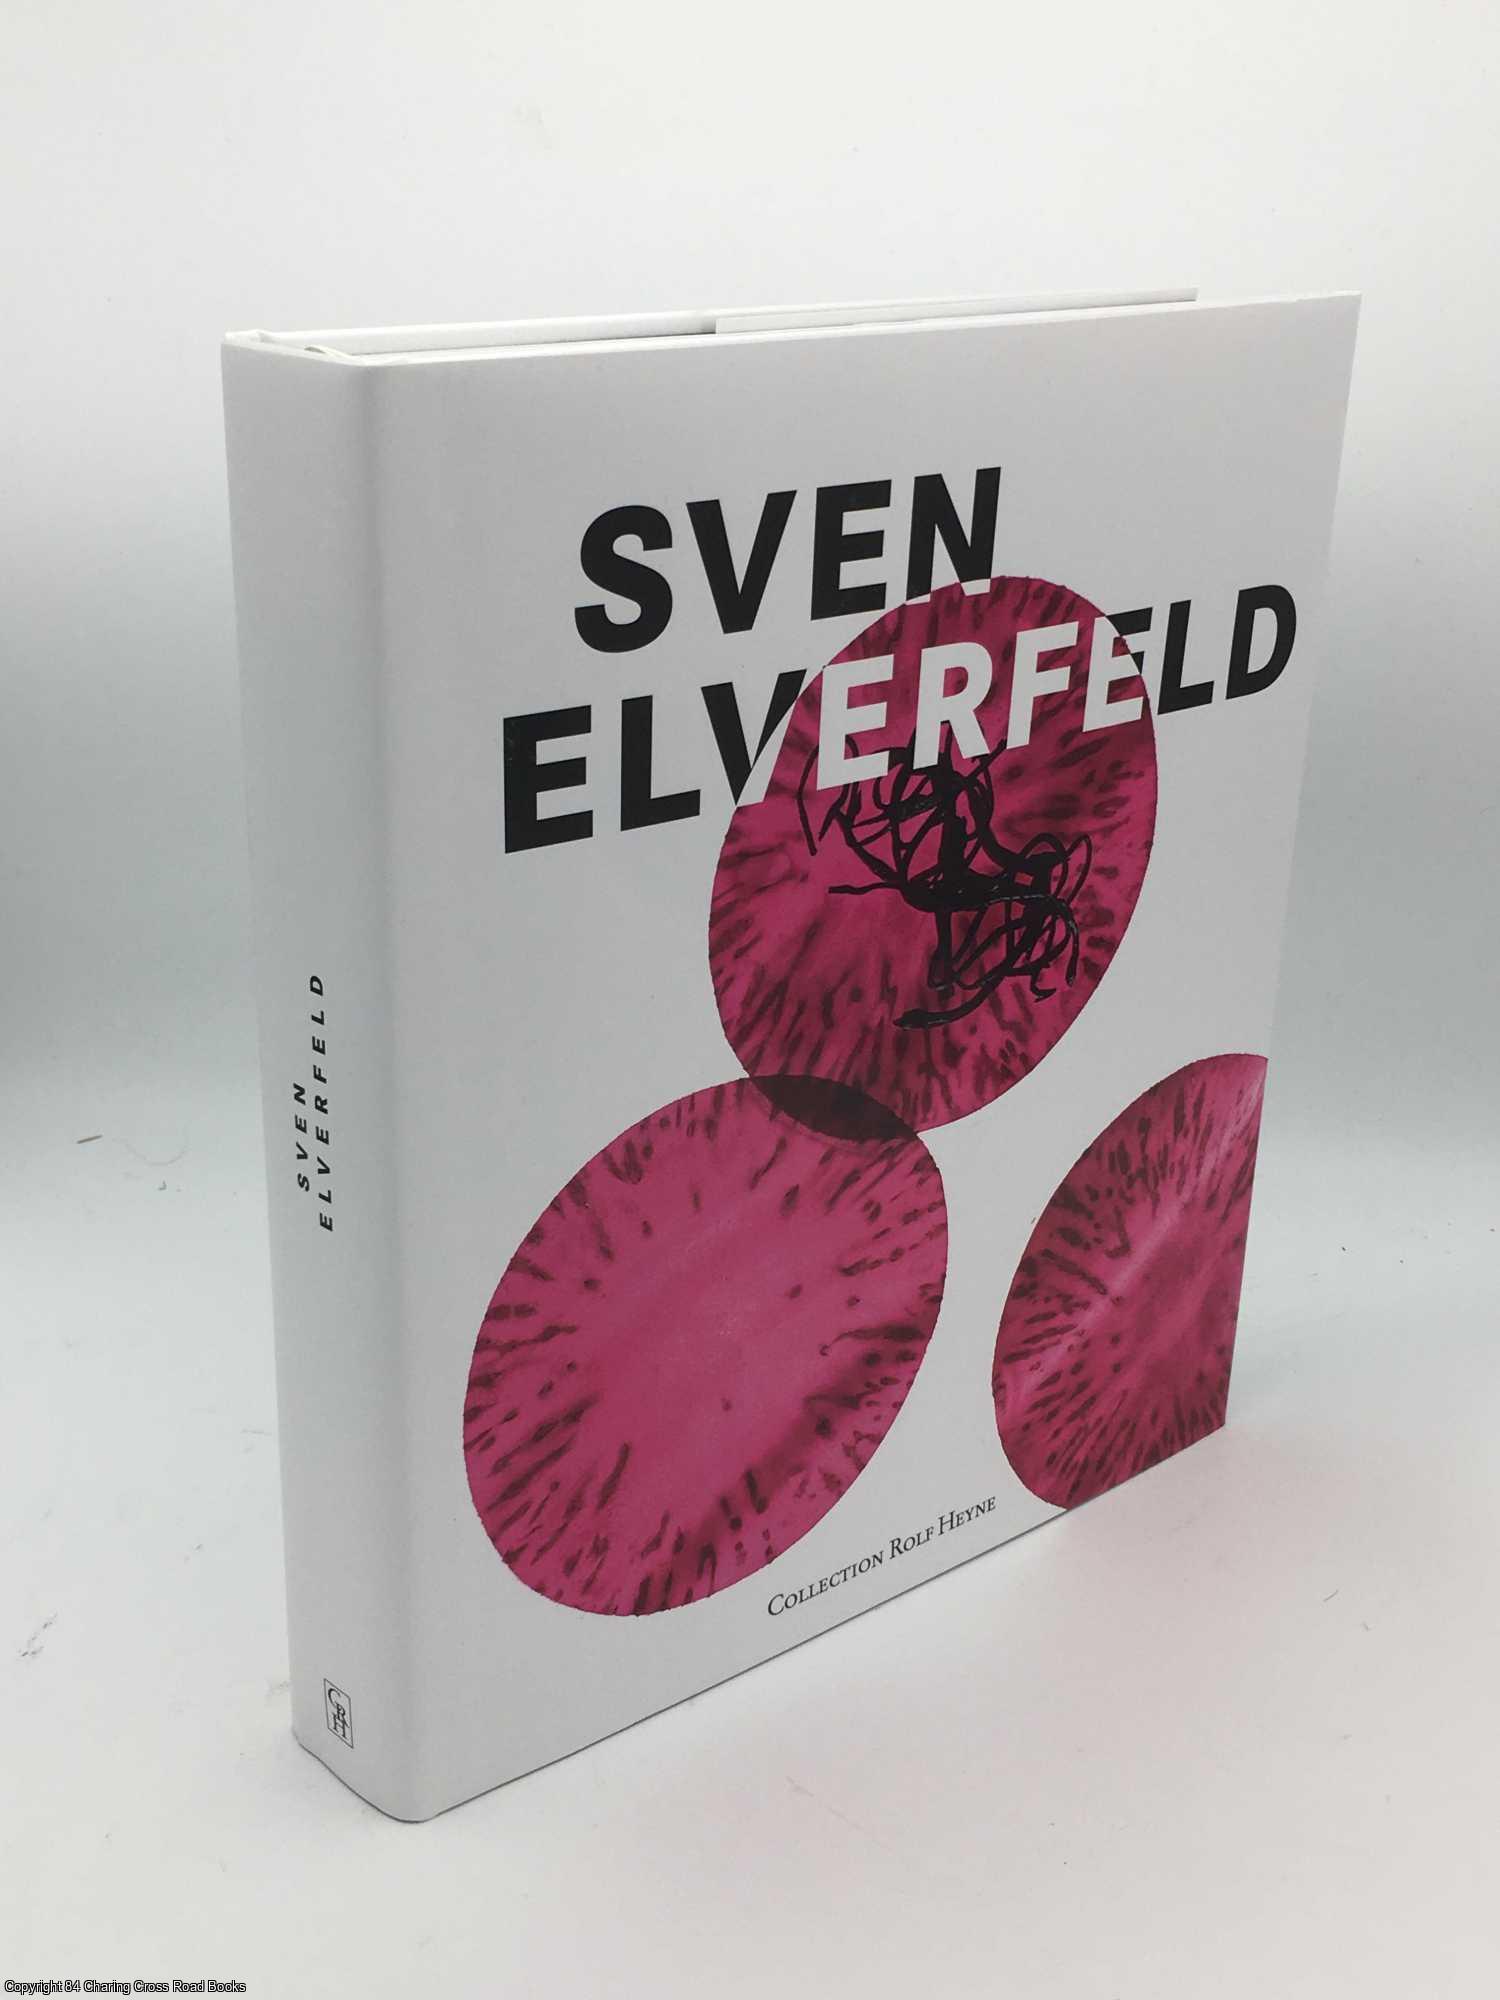 Elverfeld, Sven - Sven Elverfeld